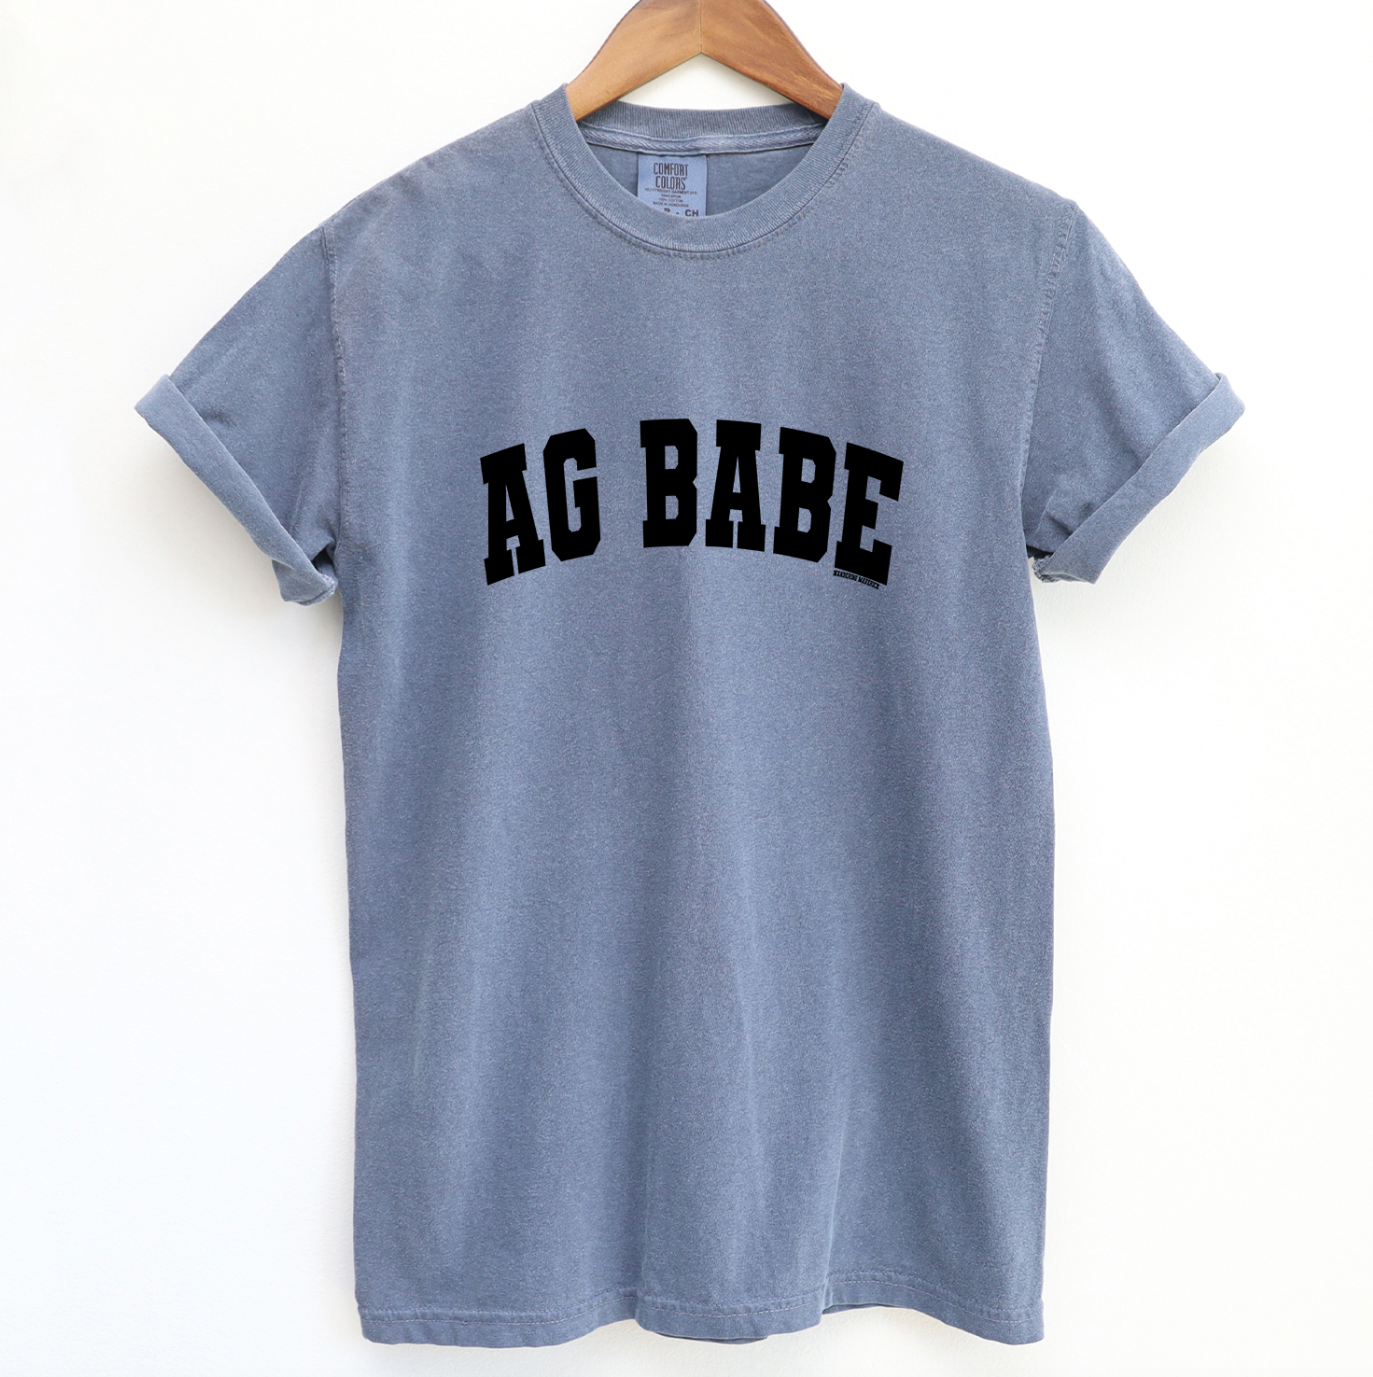 Varsity Ag Babe ComfortWash/ComfortColor T-Shirt (S-4XL) - Multiple Colors!